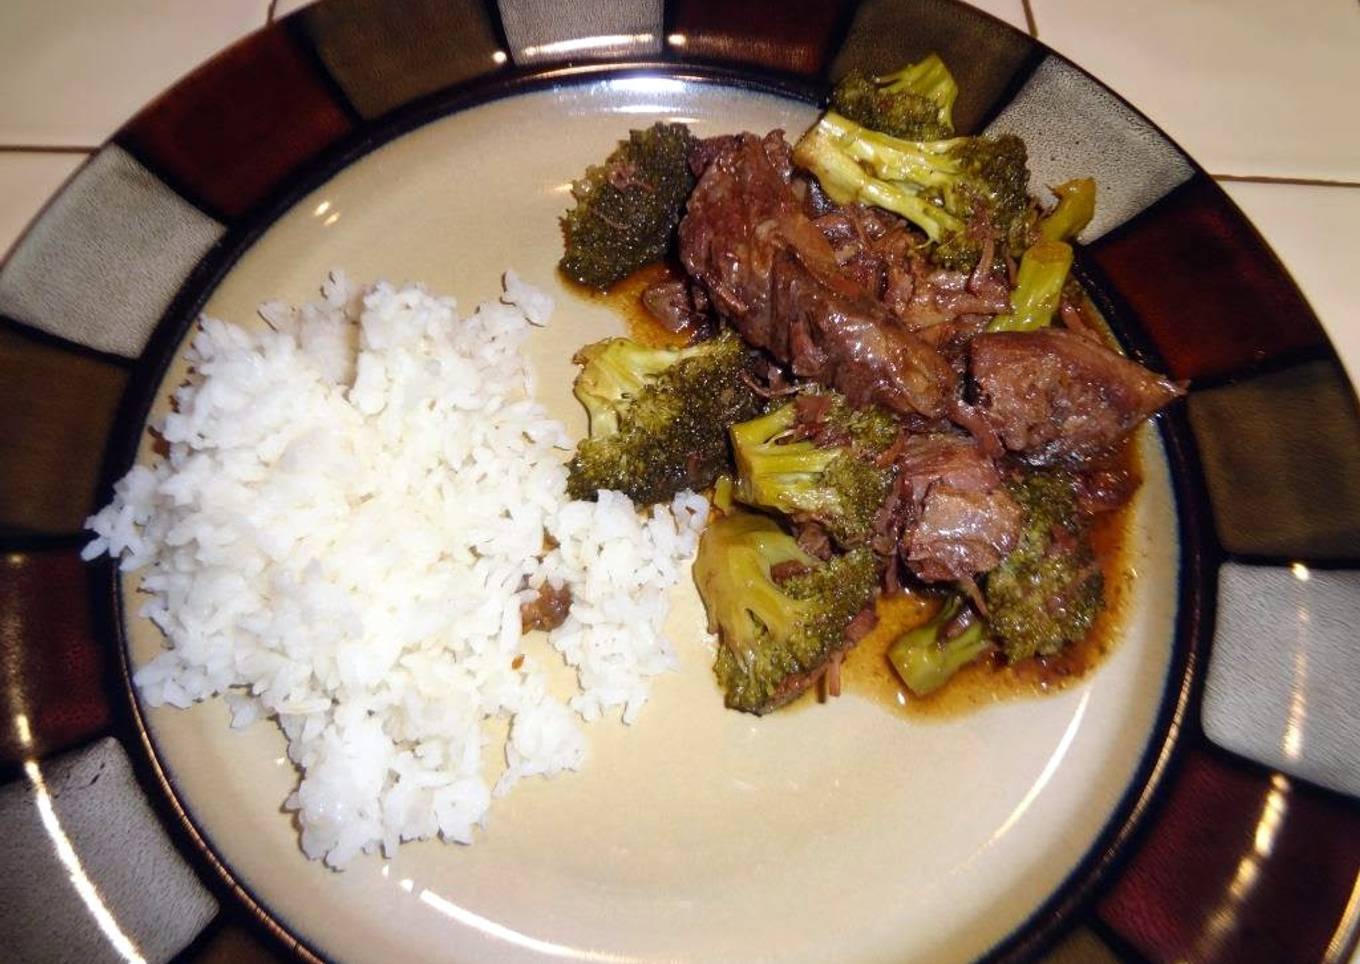 Beef and broccoli crock pot